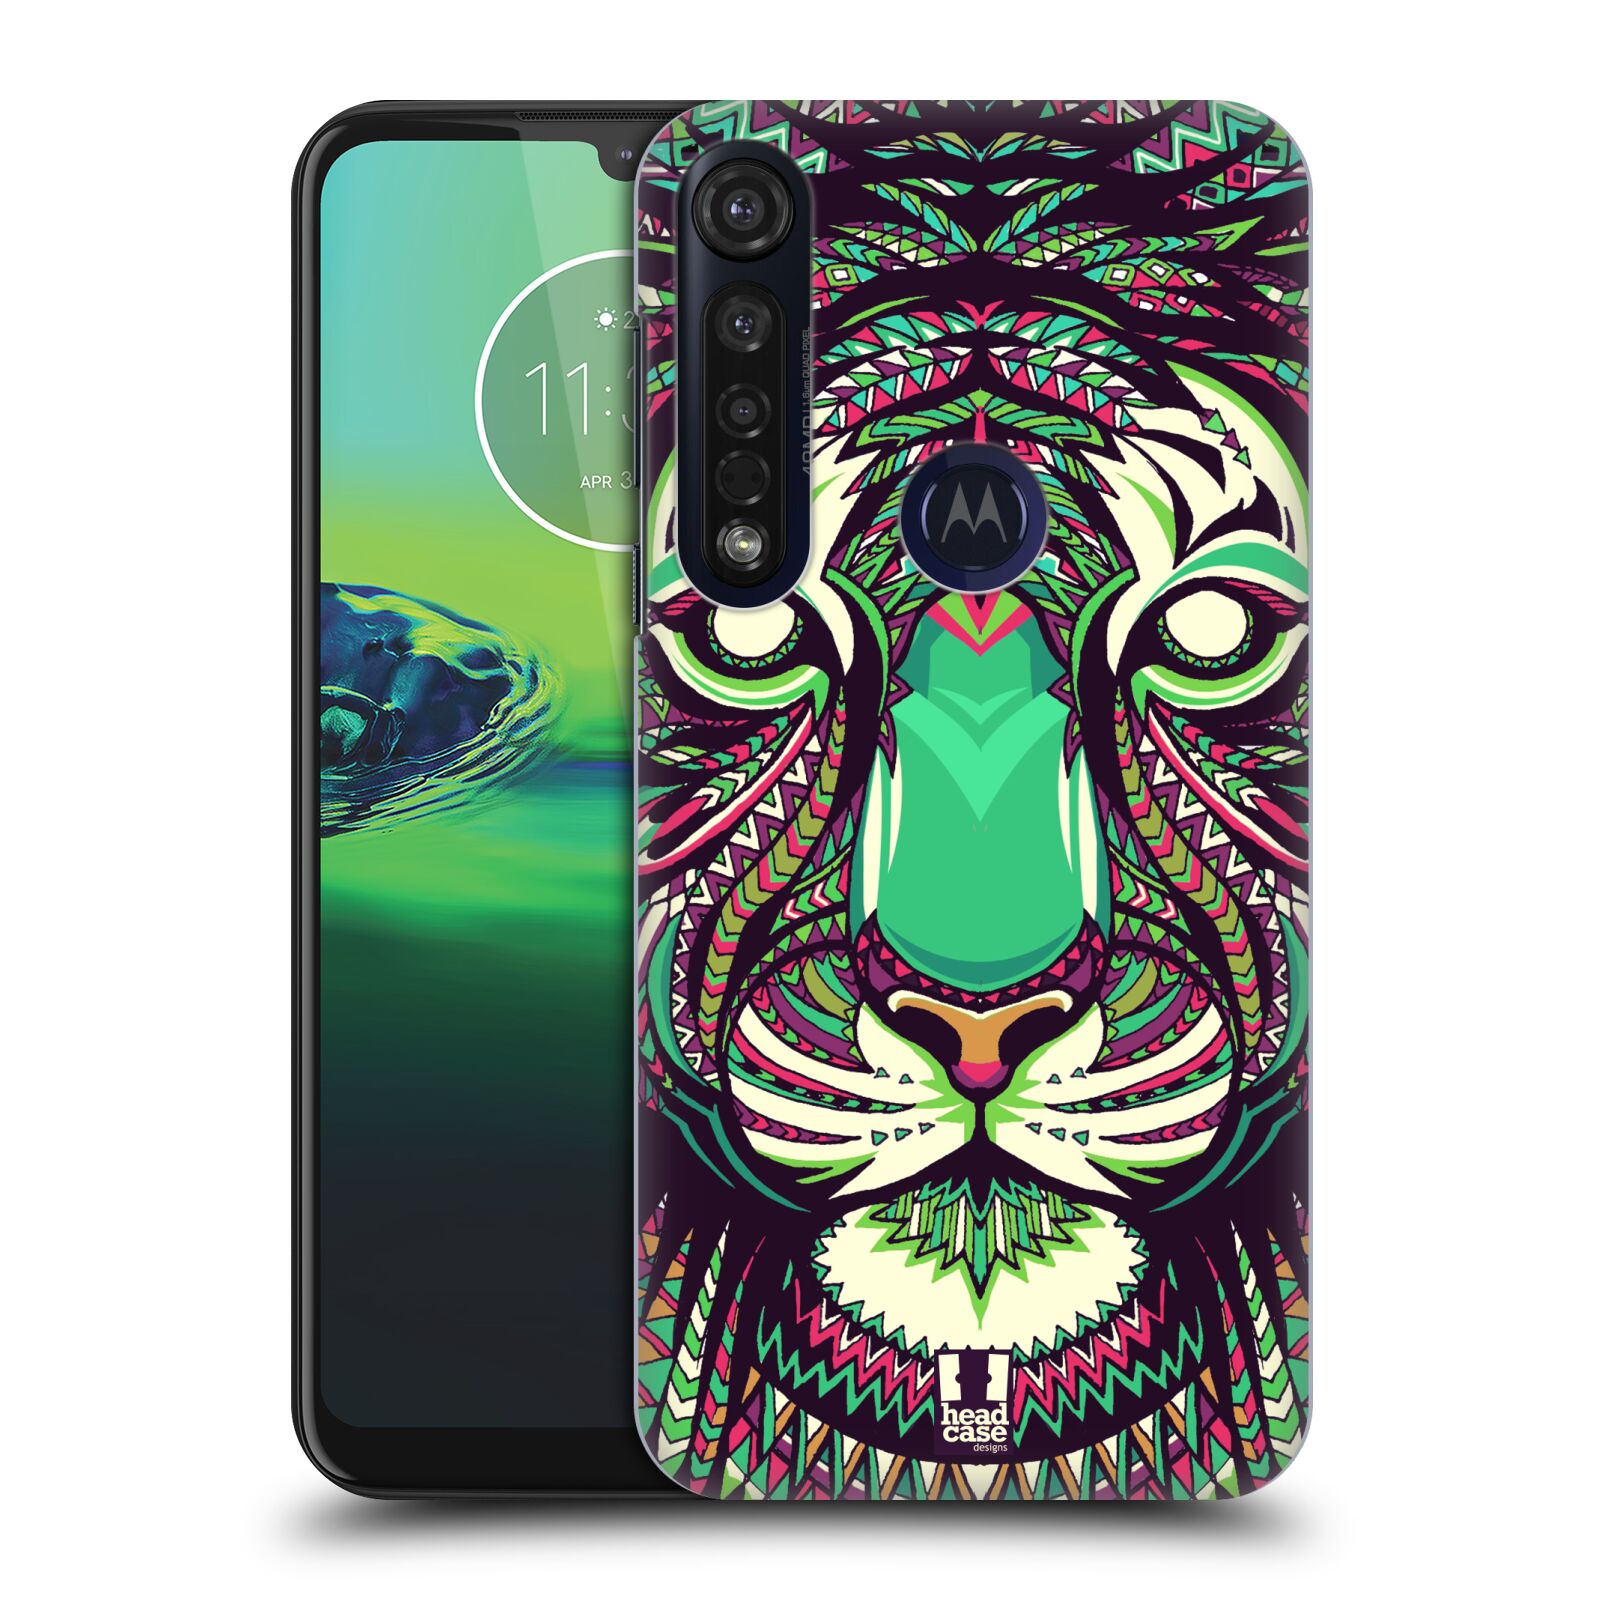 Pouzdro na mobil Motorola Moto G8 PLUS - HEAD CASE - vzor Aztécký motiv zvíře 2 tygr